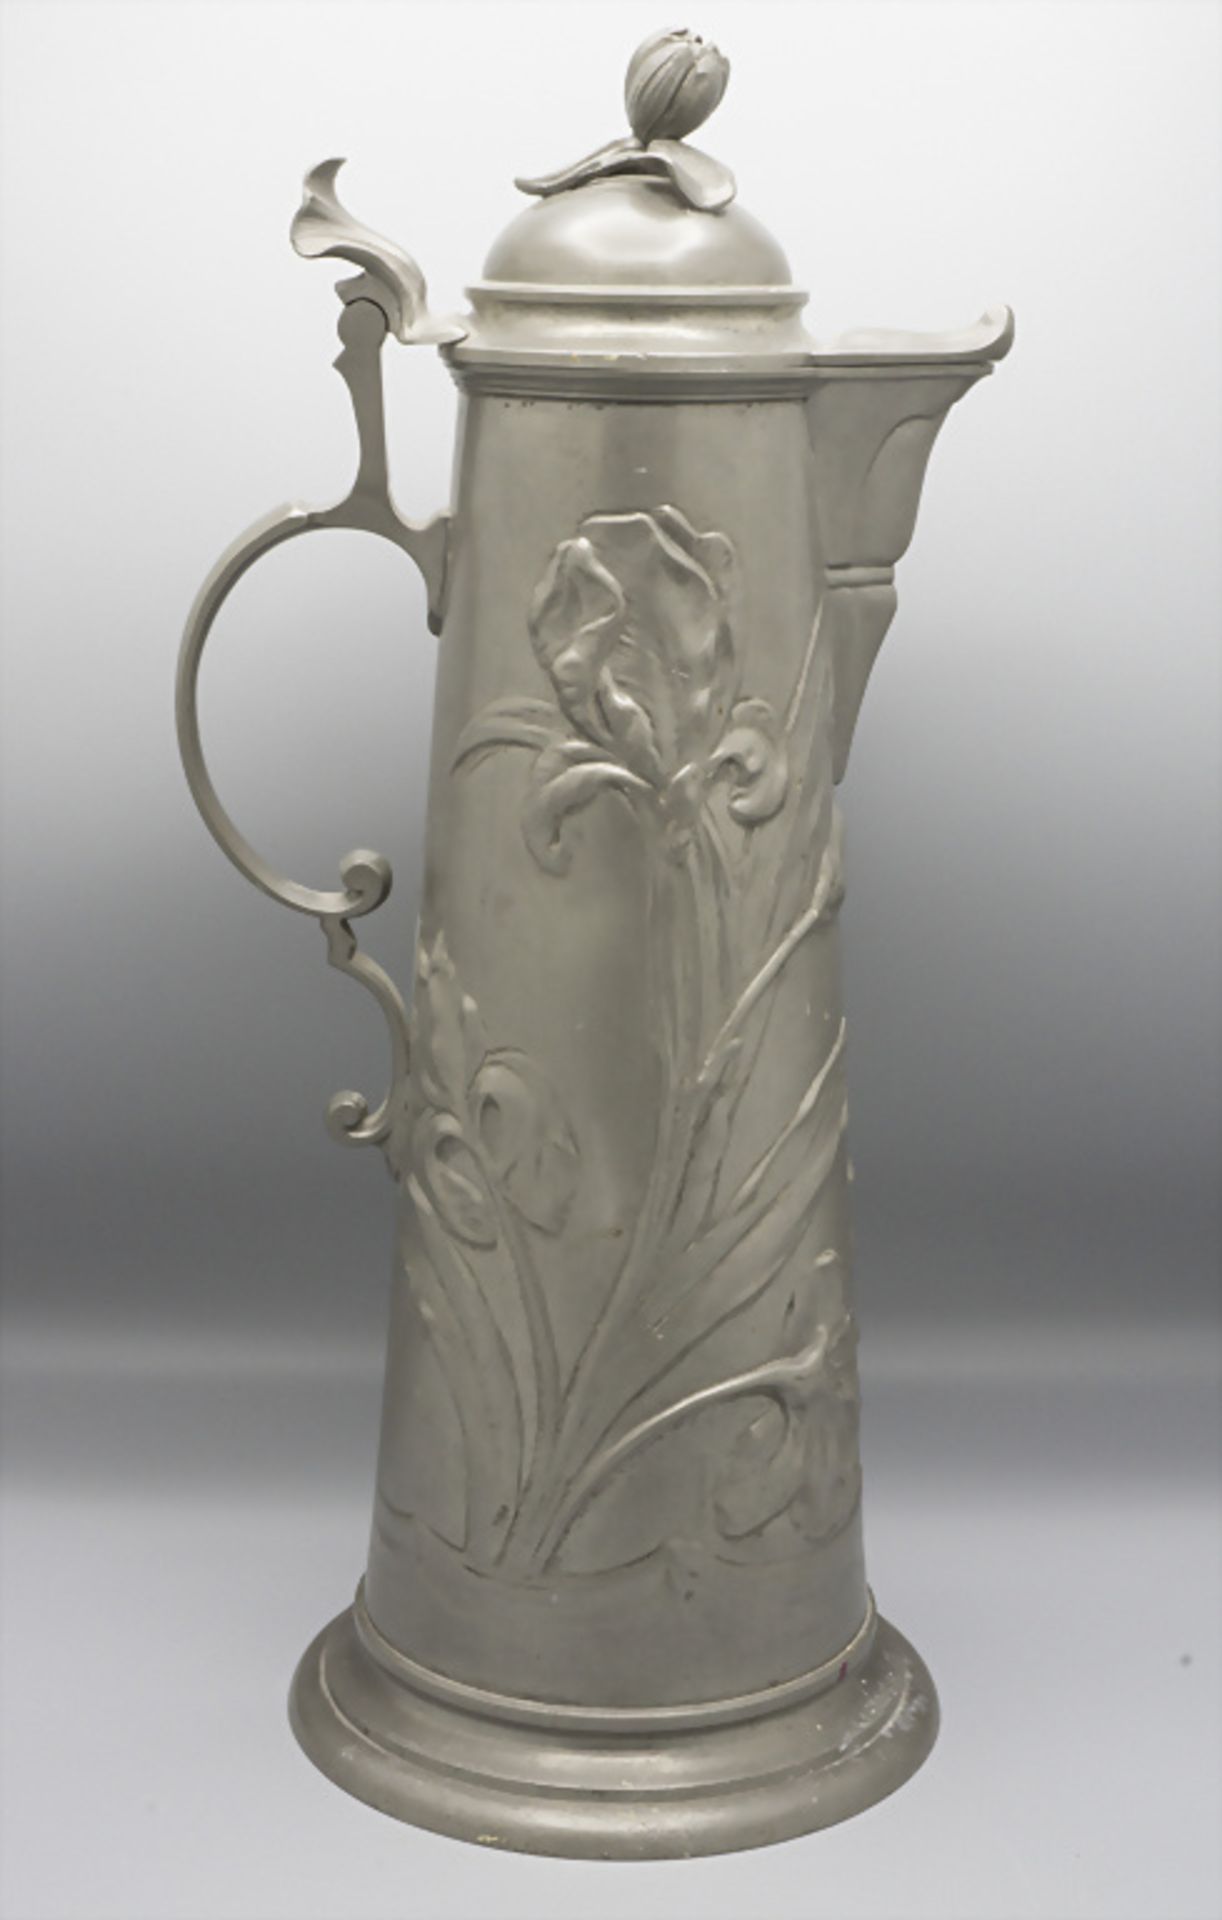 Jugendstil Zinnschenkkanne / An Art Déco pewter jug, um 1900 - Image 2 of 4